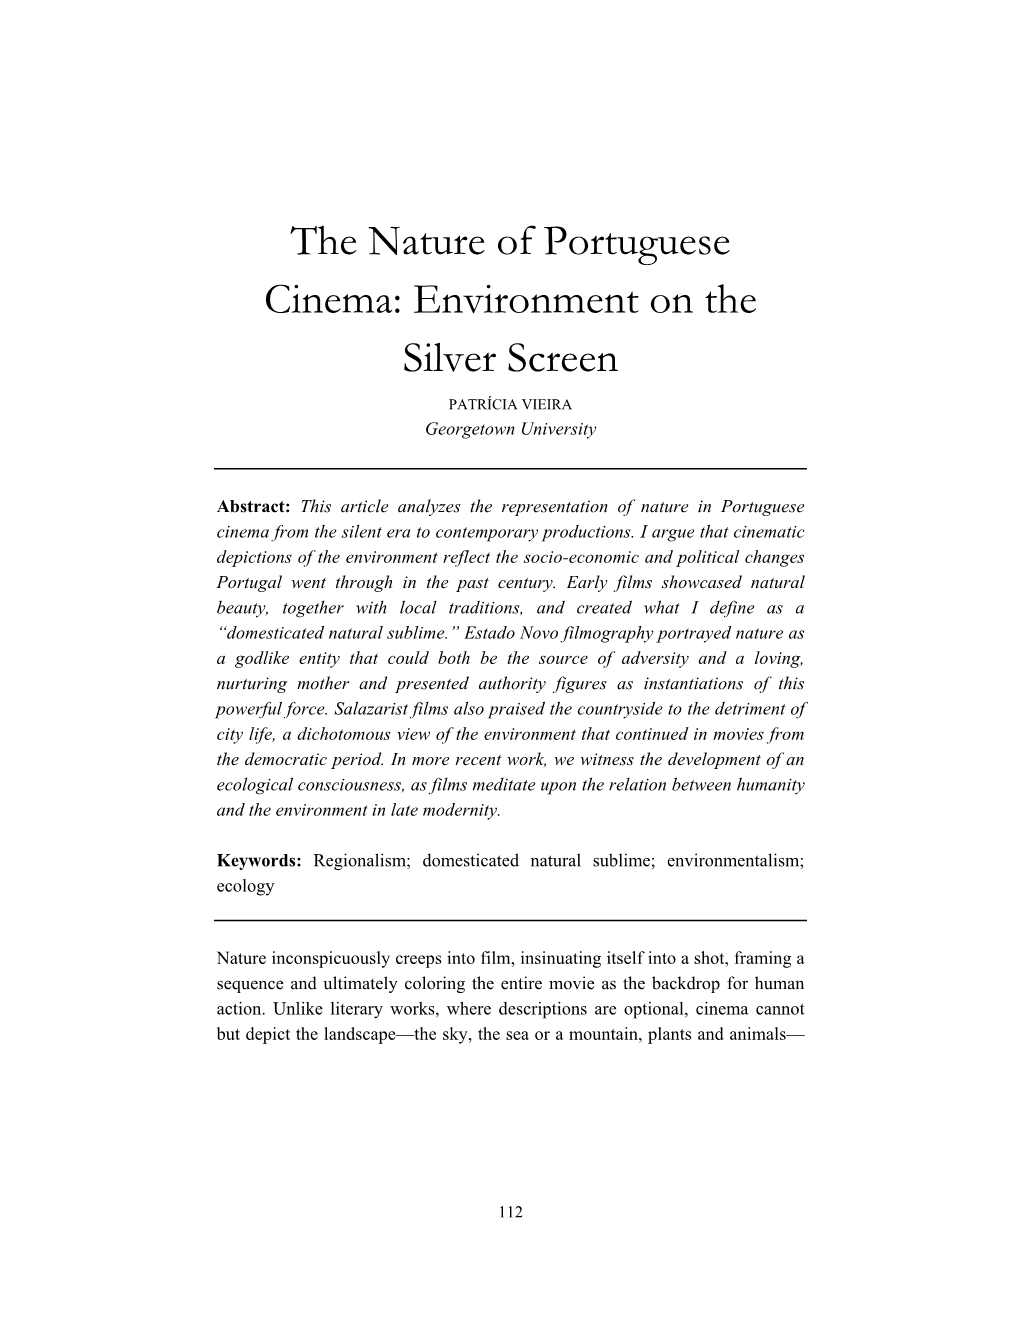 The Nature of Portuguese Cinema: Environment on the Silver Screen PATRÍCIA VIEIRA Georgetown University